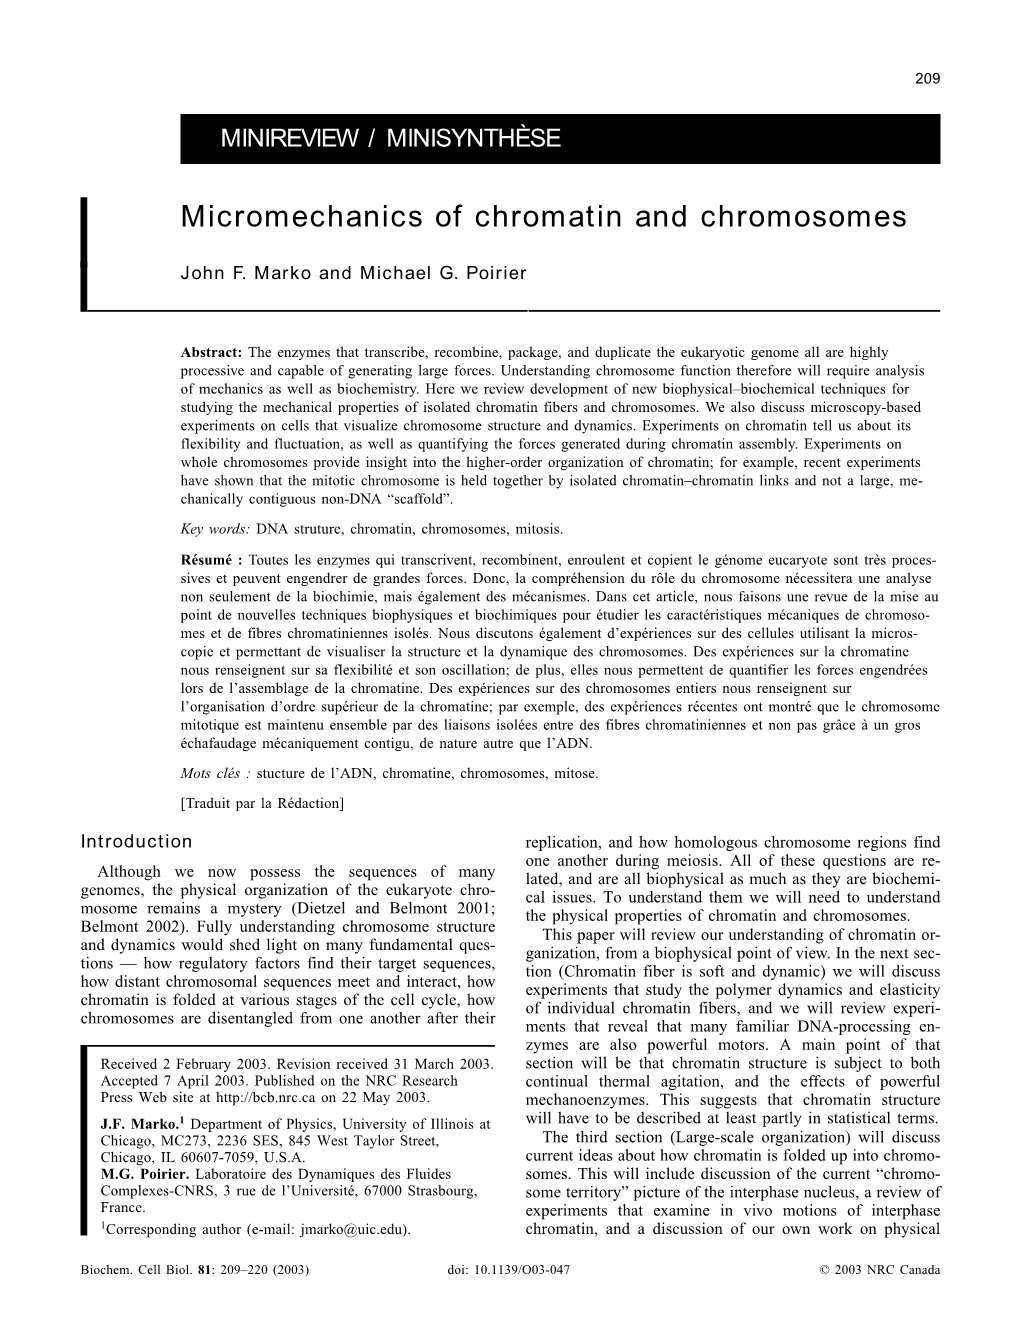 Micromechanics of Chromatin and Chromosomes